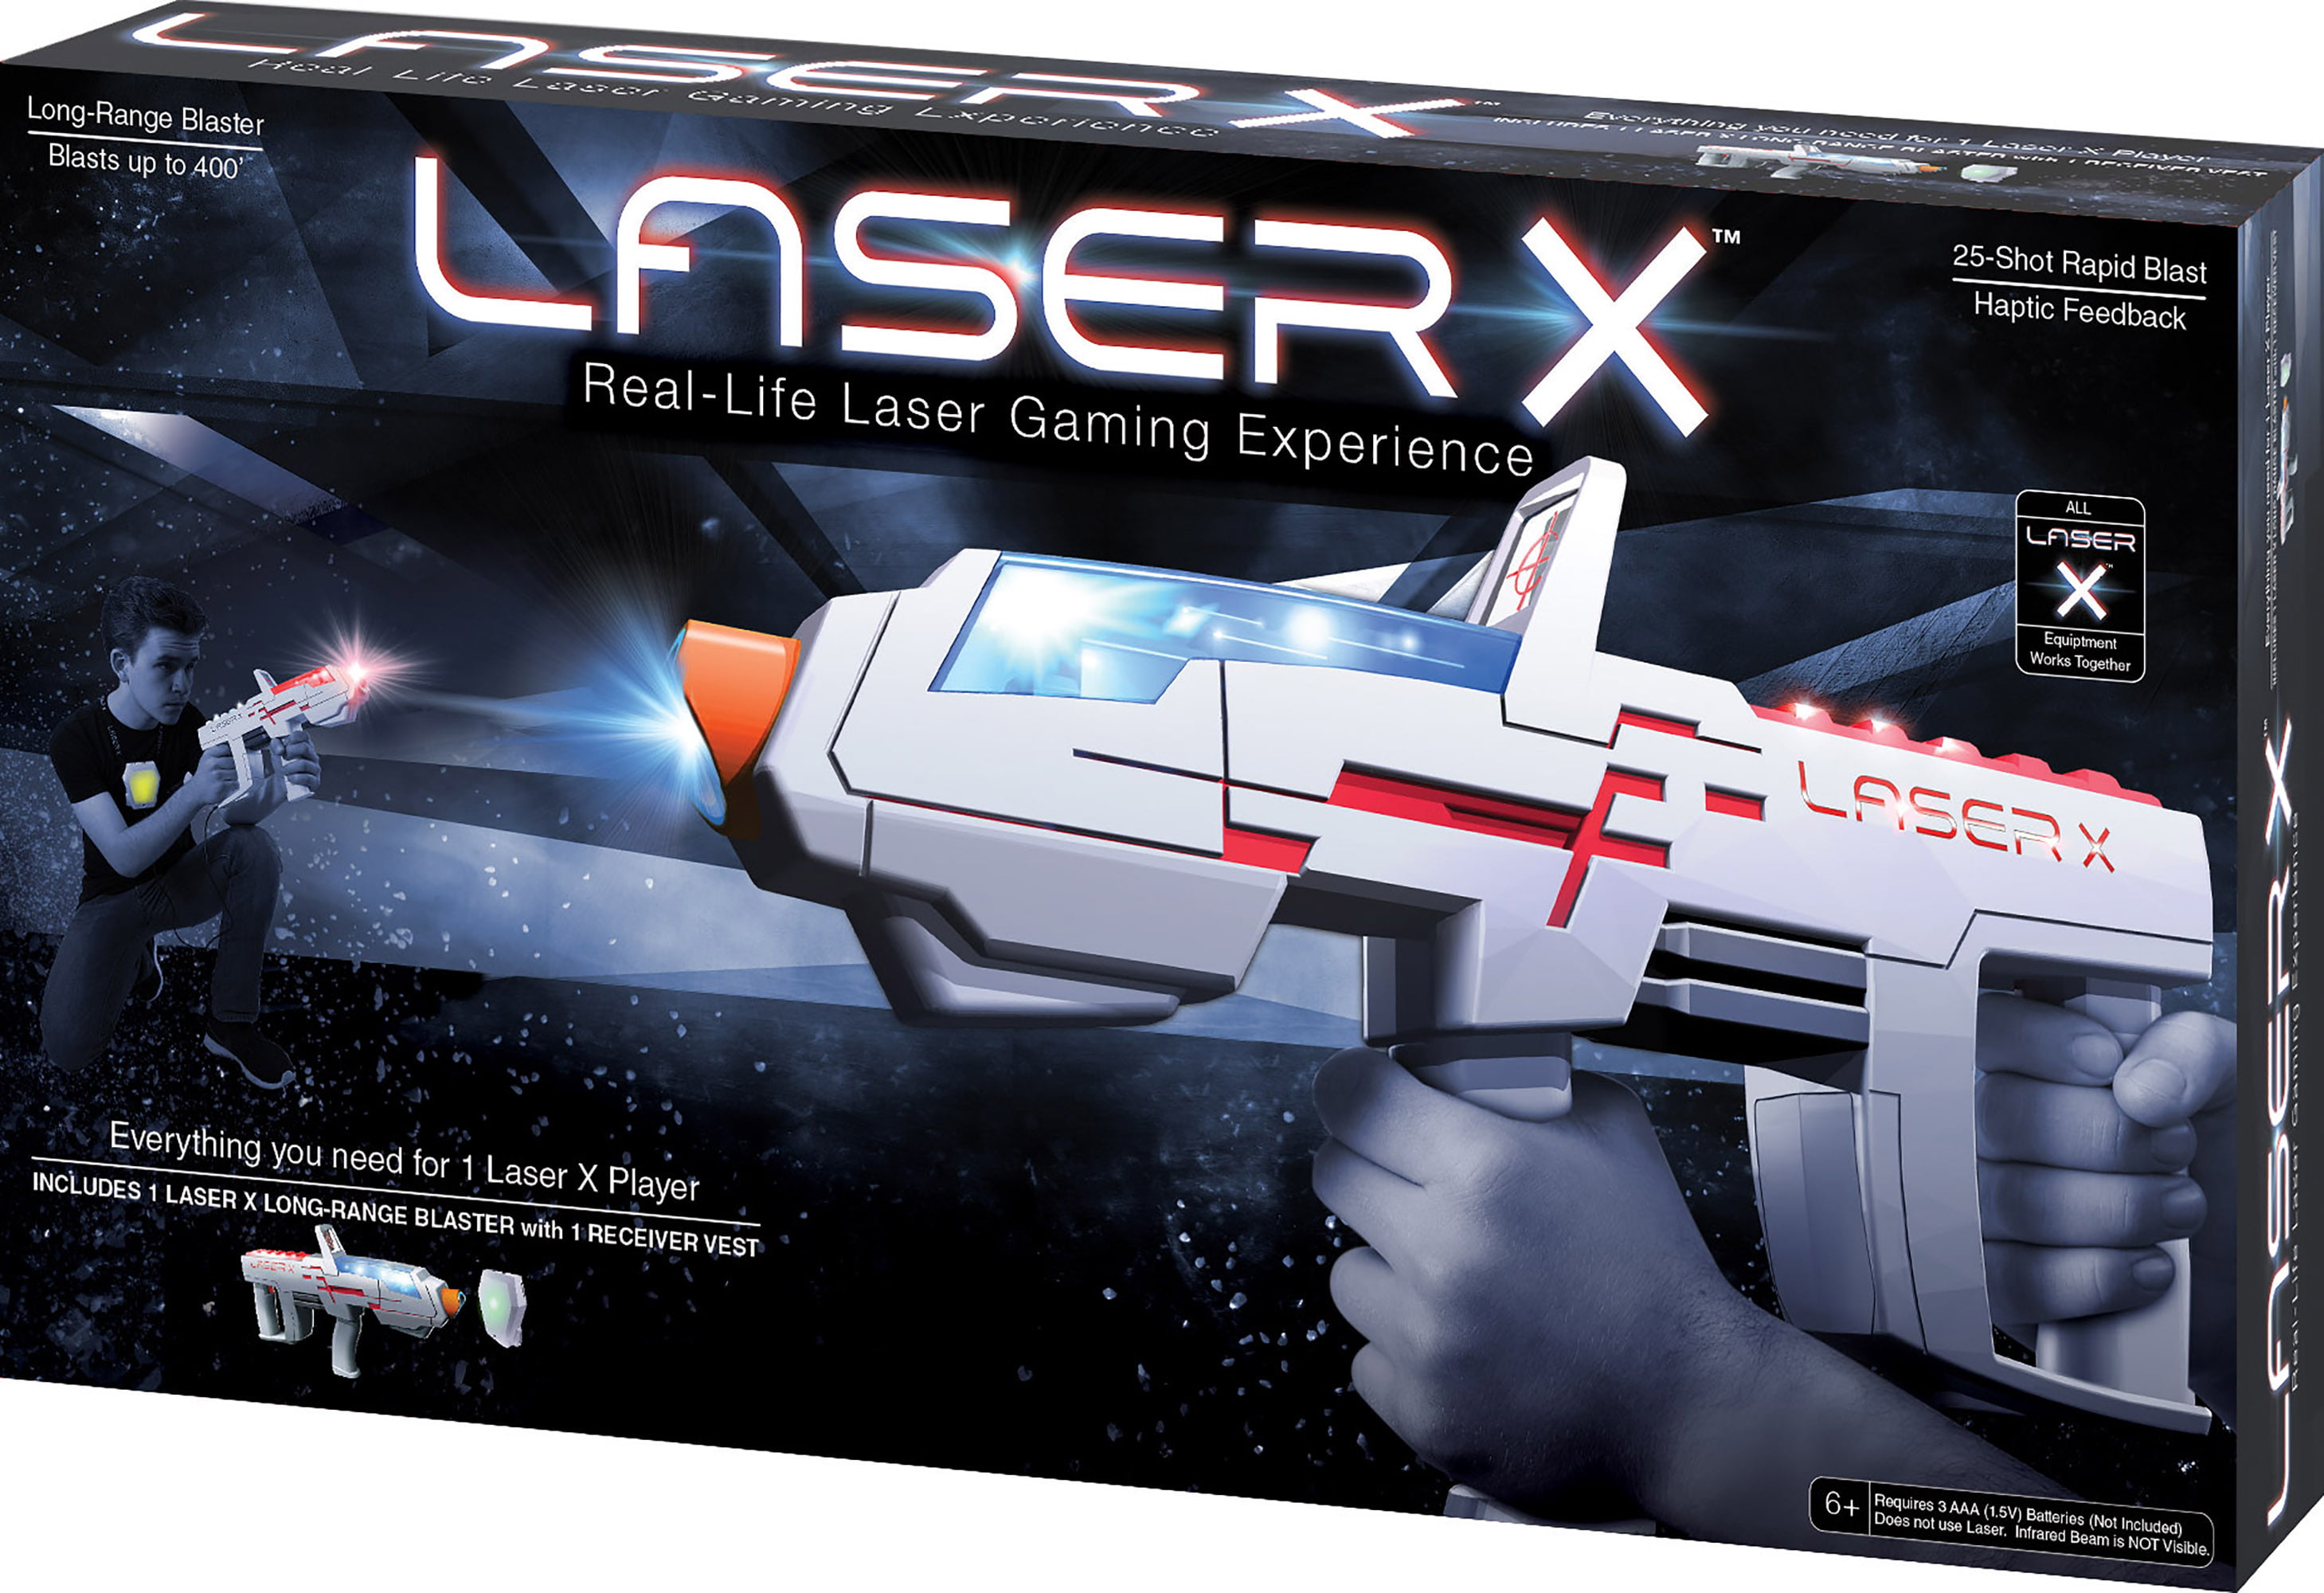 Laser X - Double Blaster Evolution - Dès 6 ans - Lansay